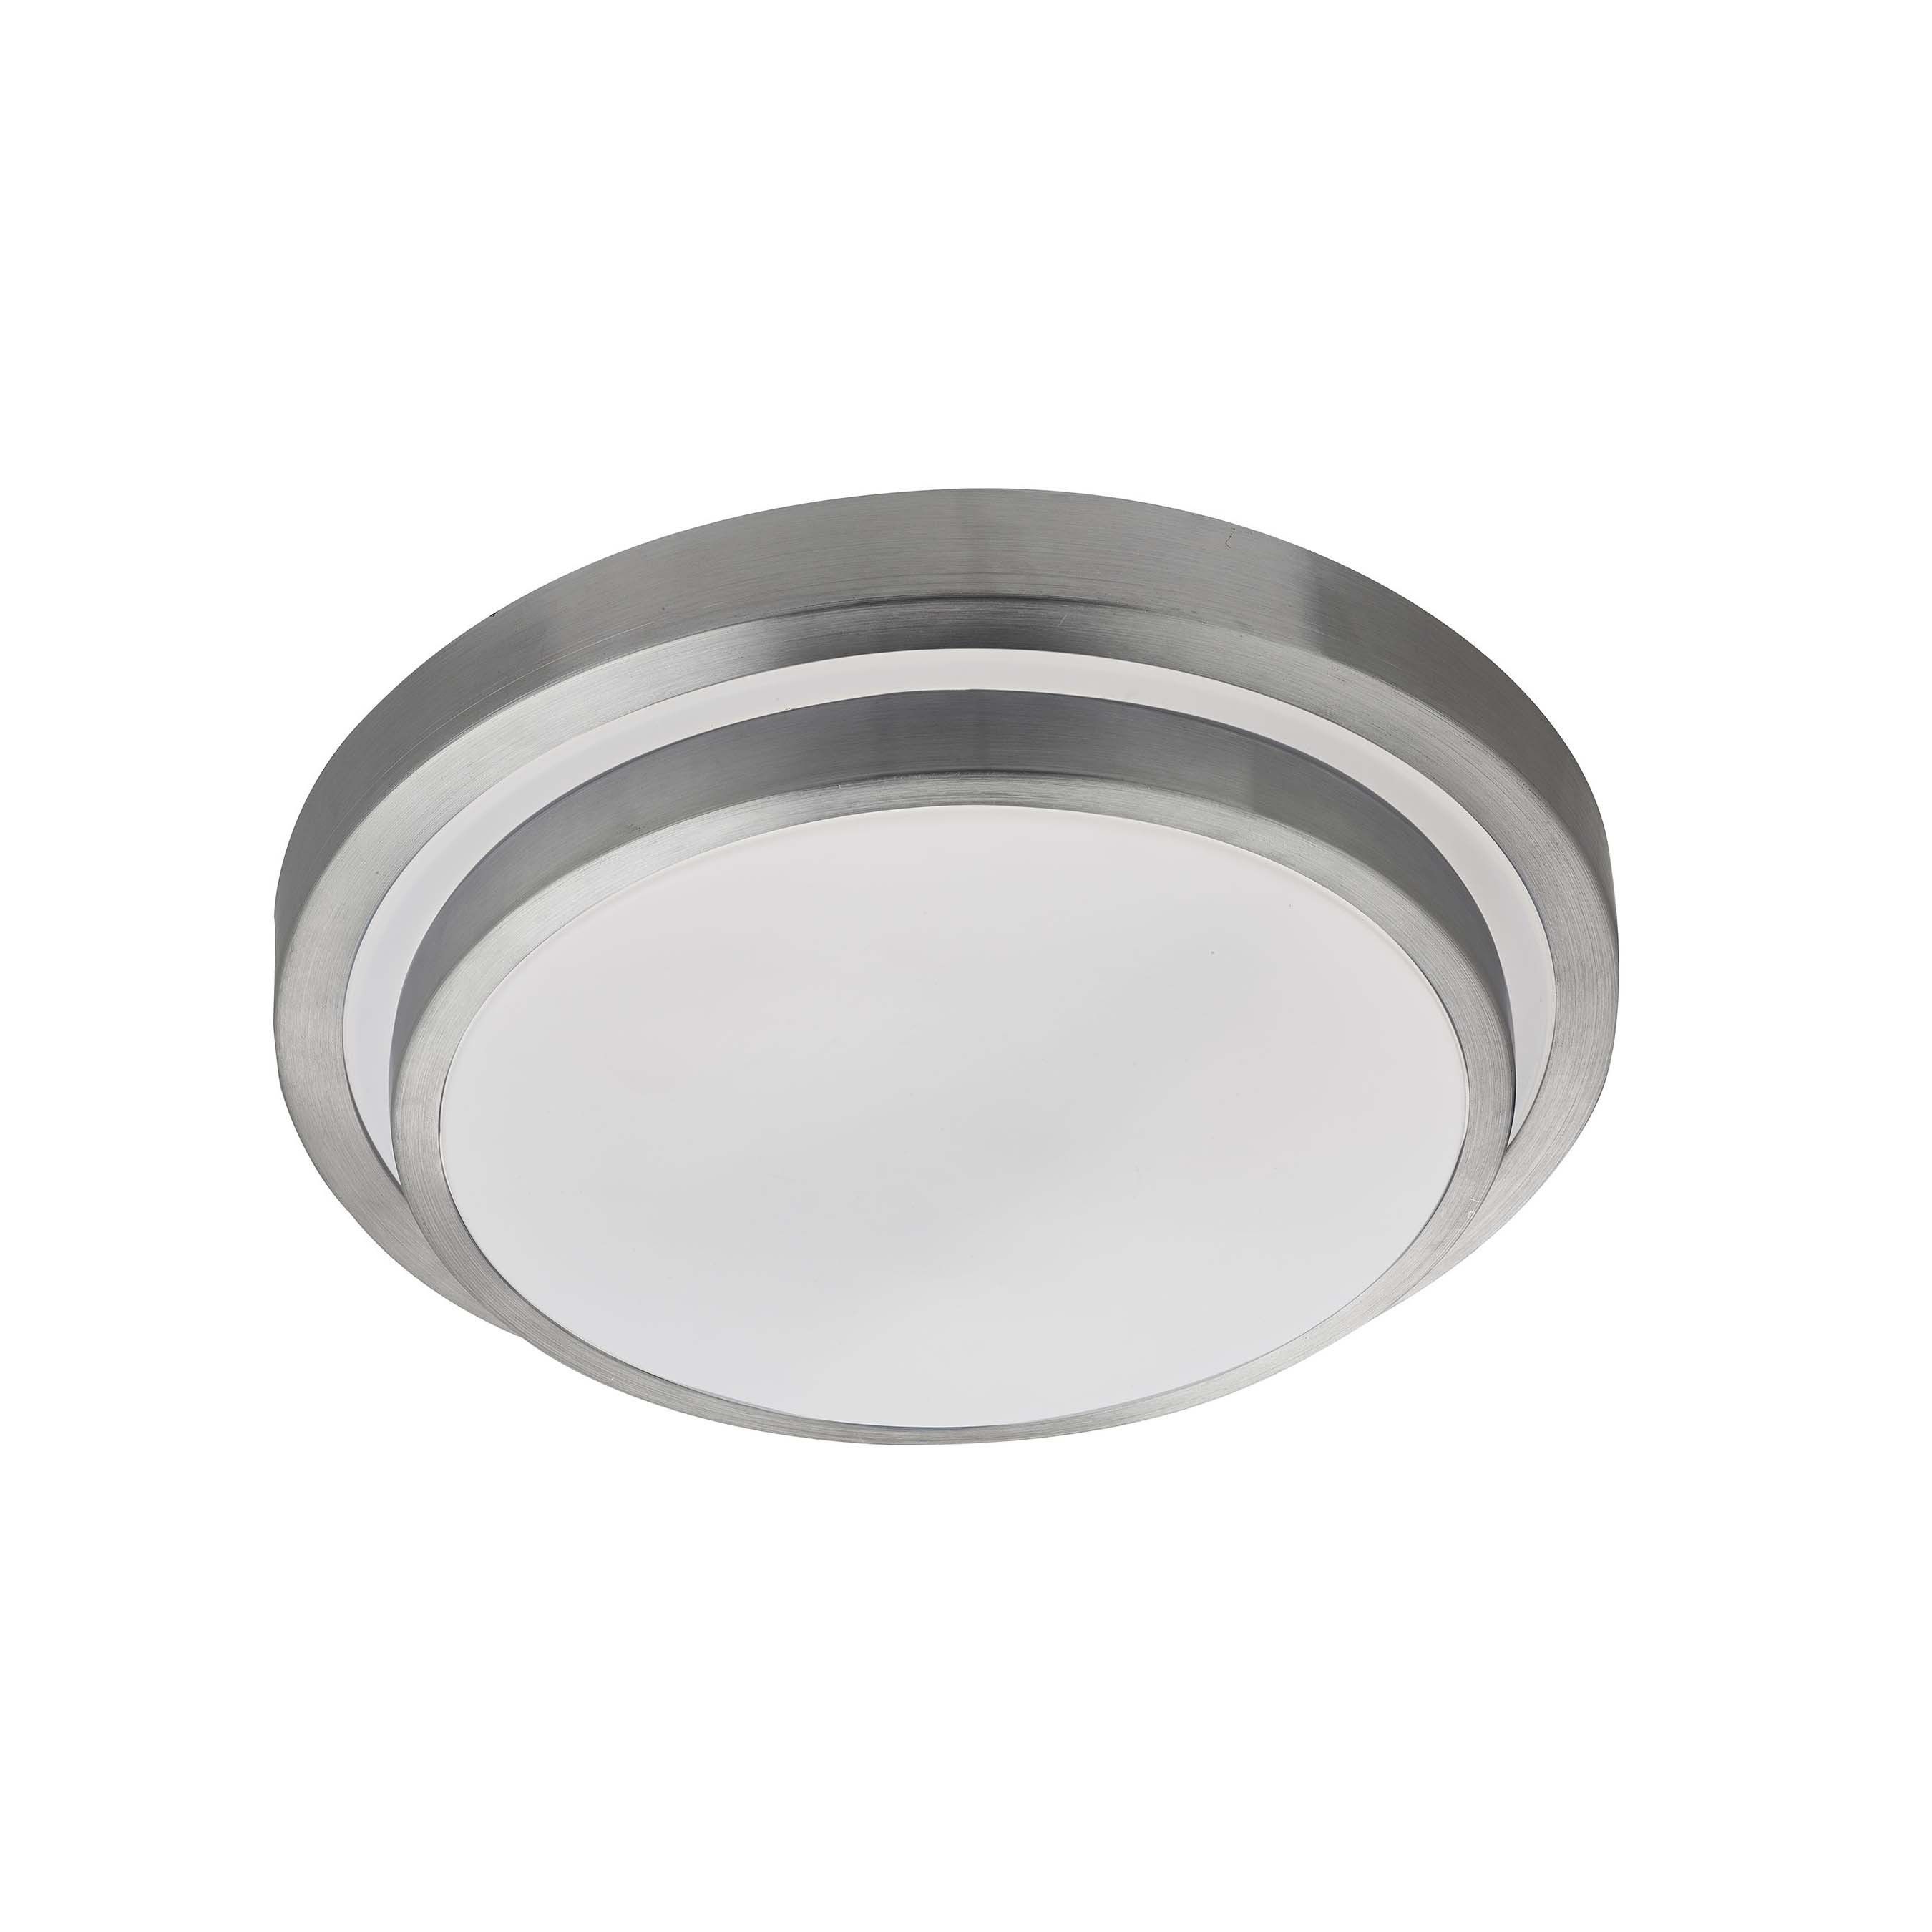 Searchlight Bathroom - plafondlamp badkamer - Ø 34 x 10 cm - 15W LED incl. - IP44 - zilver en wit | Lichtkoning